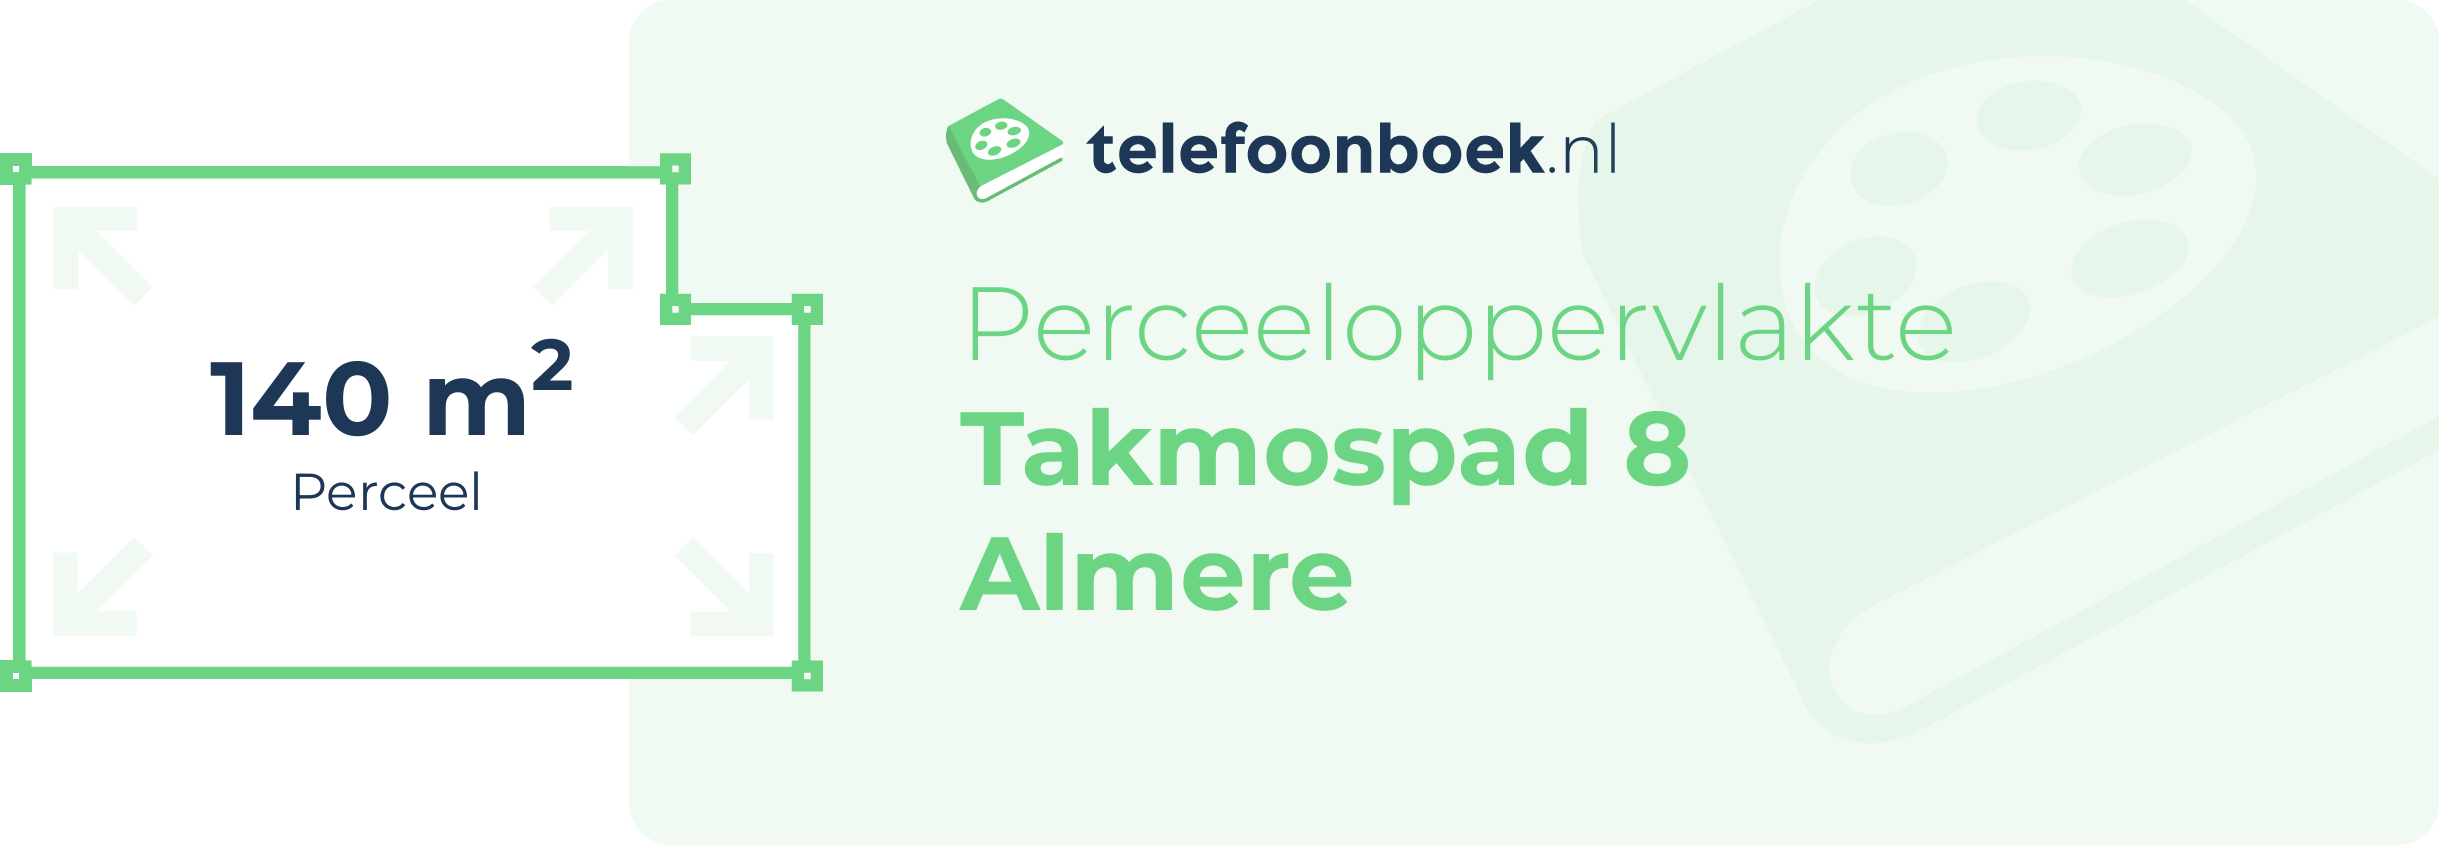 Perceeloppervlakte Takmospad 8 Almere